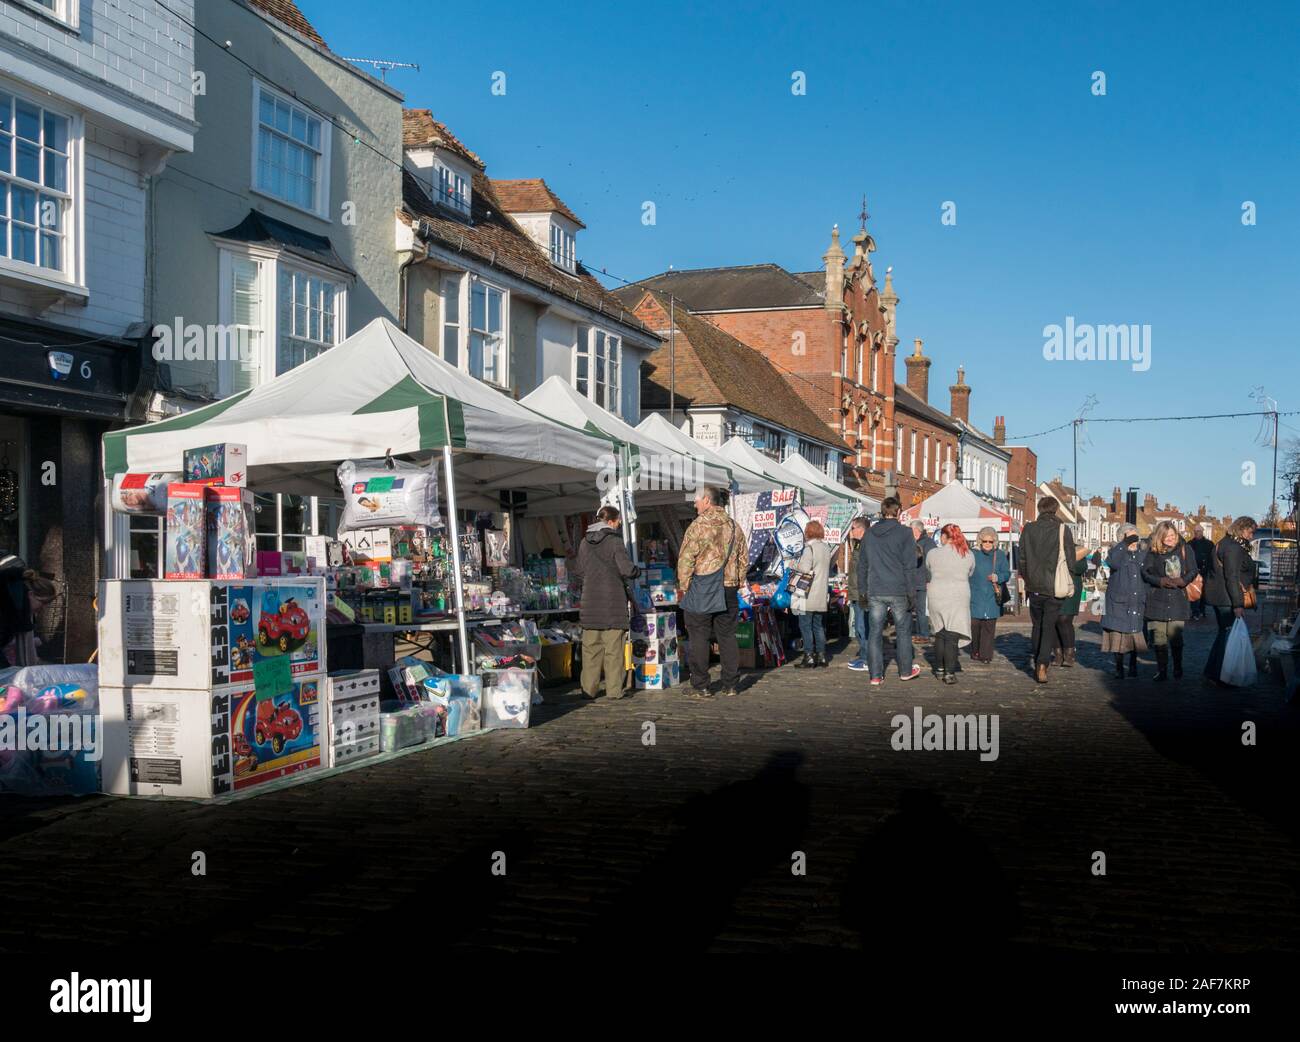 Market stalls in the medieval market town of  Faversham, Kent, UK Stock Photo